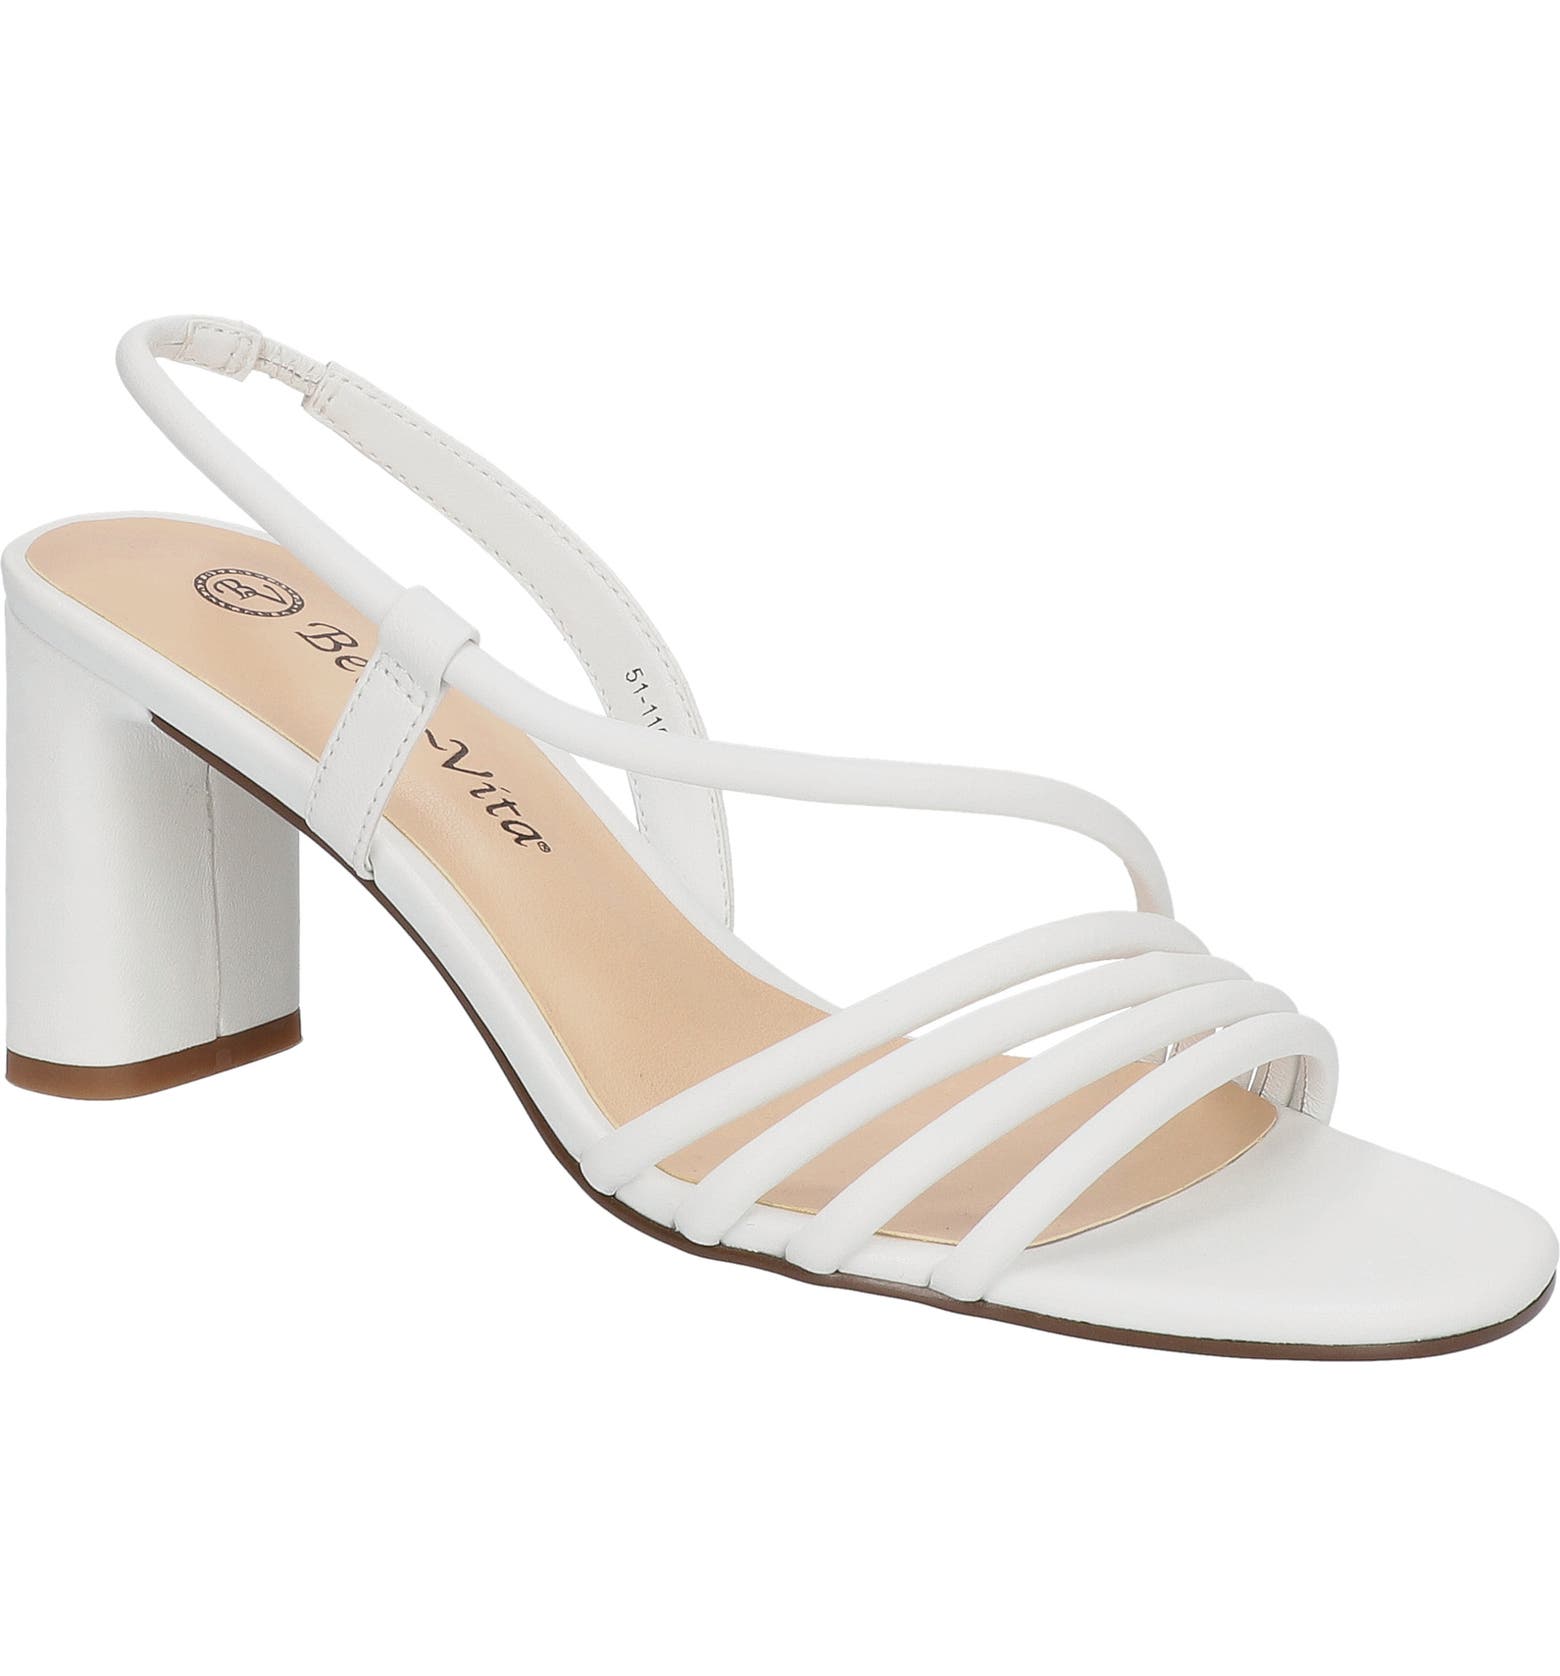 White strappy heels